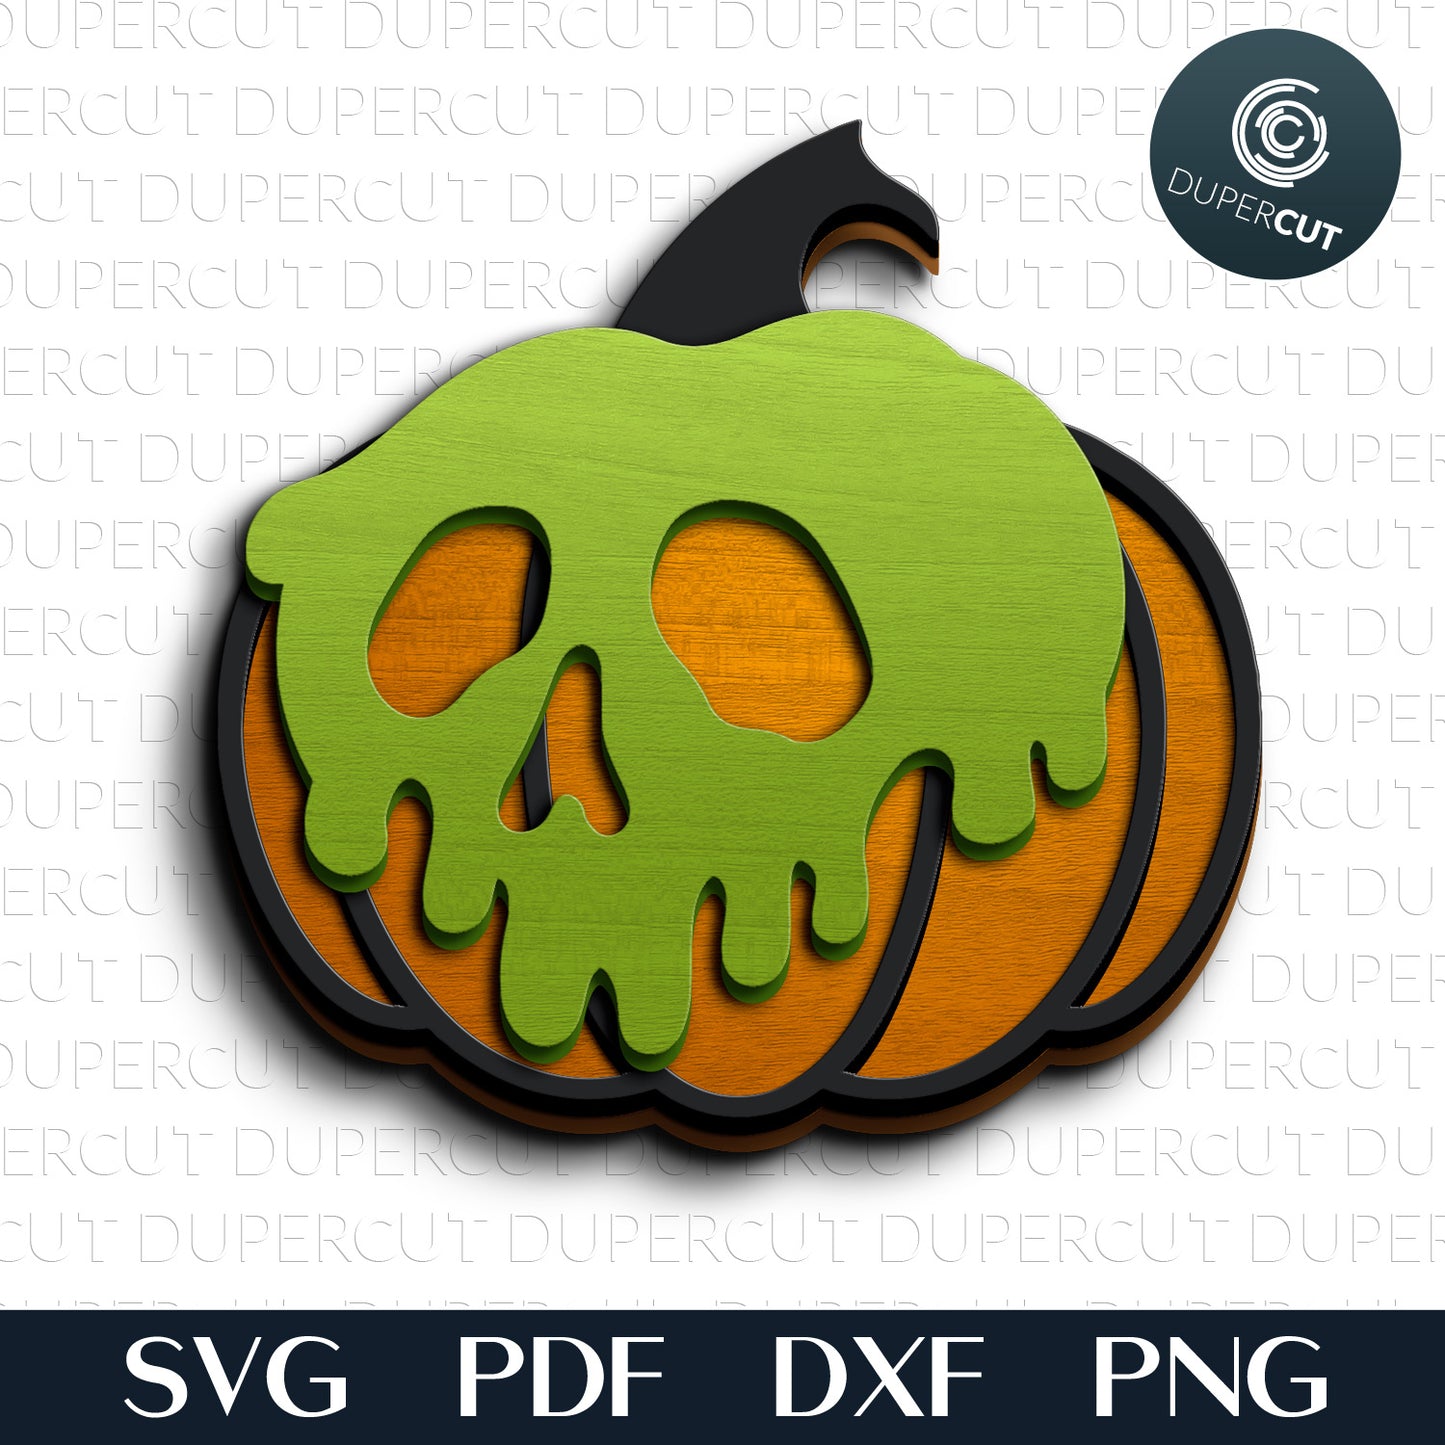 Poison Pumpkin apple Halloween character - SVG DXF layered cut files for Glowforge, X-tool, Cricut, laser CNC Plasma by www.DuperCut.com